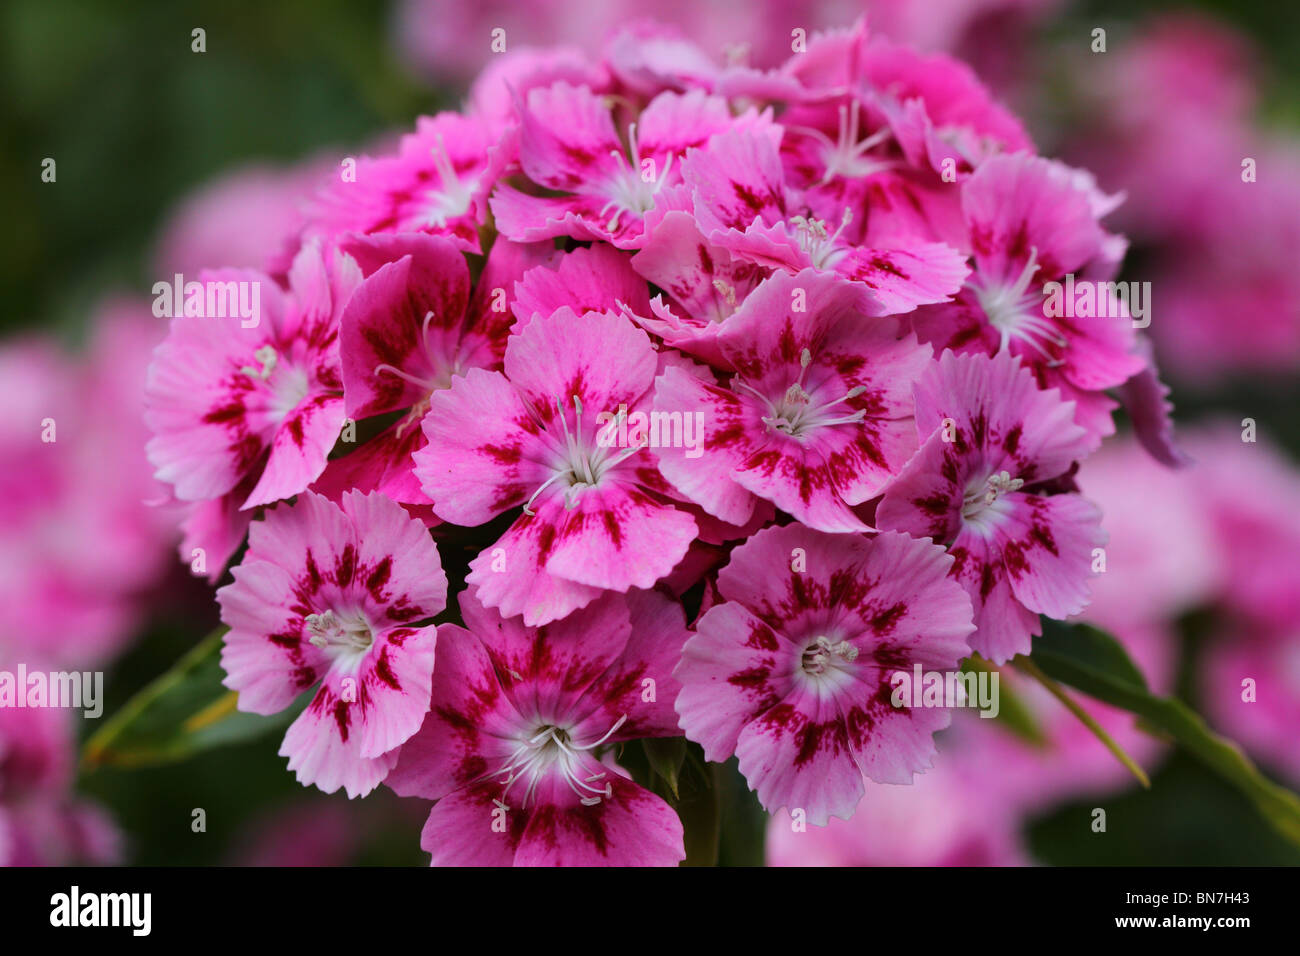 Pink carnation sweet wiliams flowers close up Dianthus barbatus Stock Photo